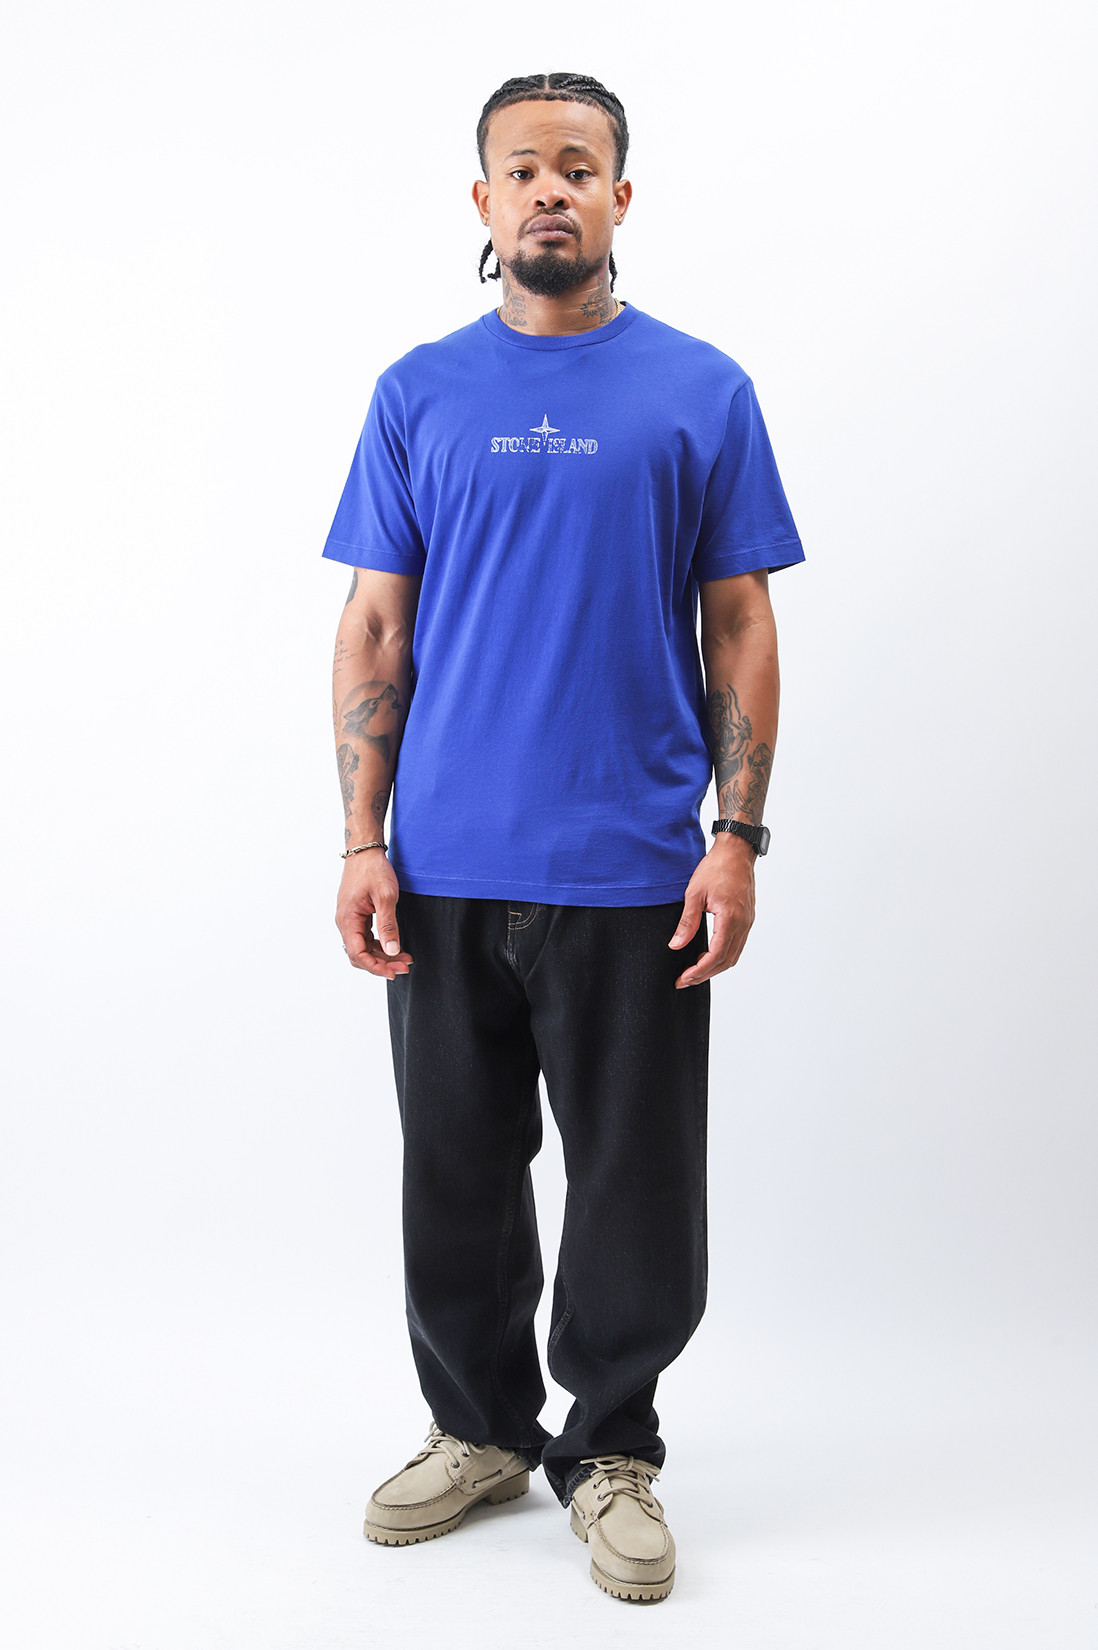 2ns81 t-shirt handprint v0022 Bluette